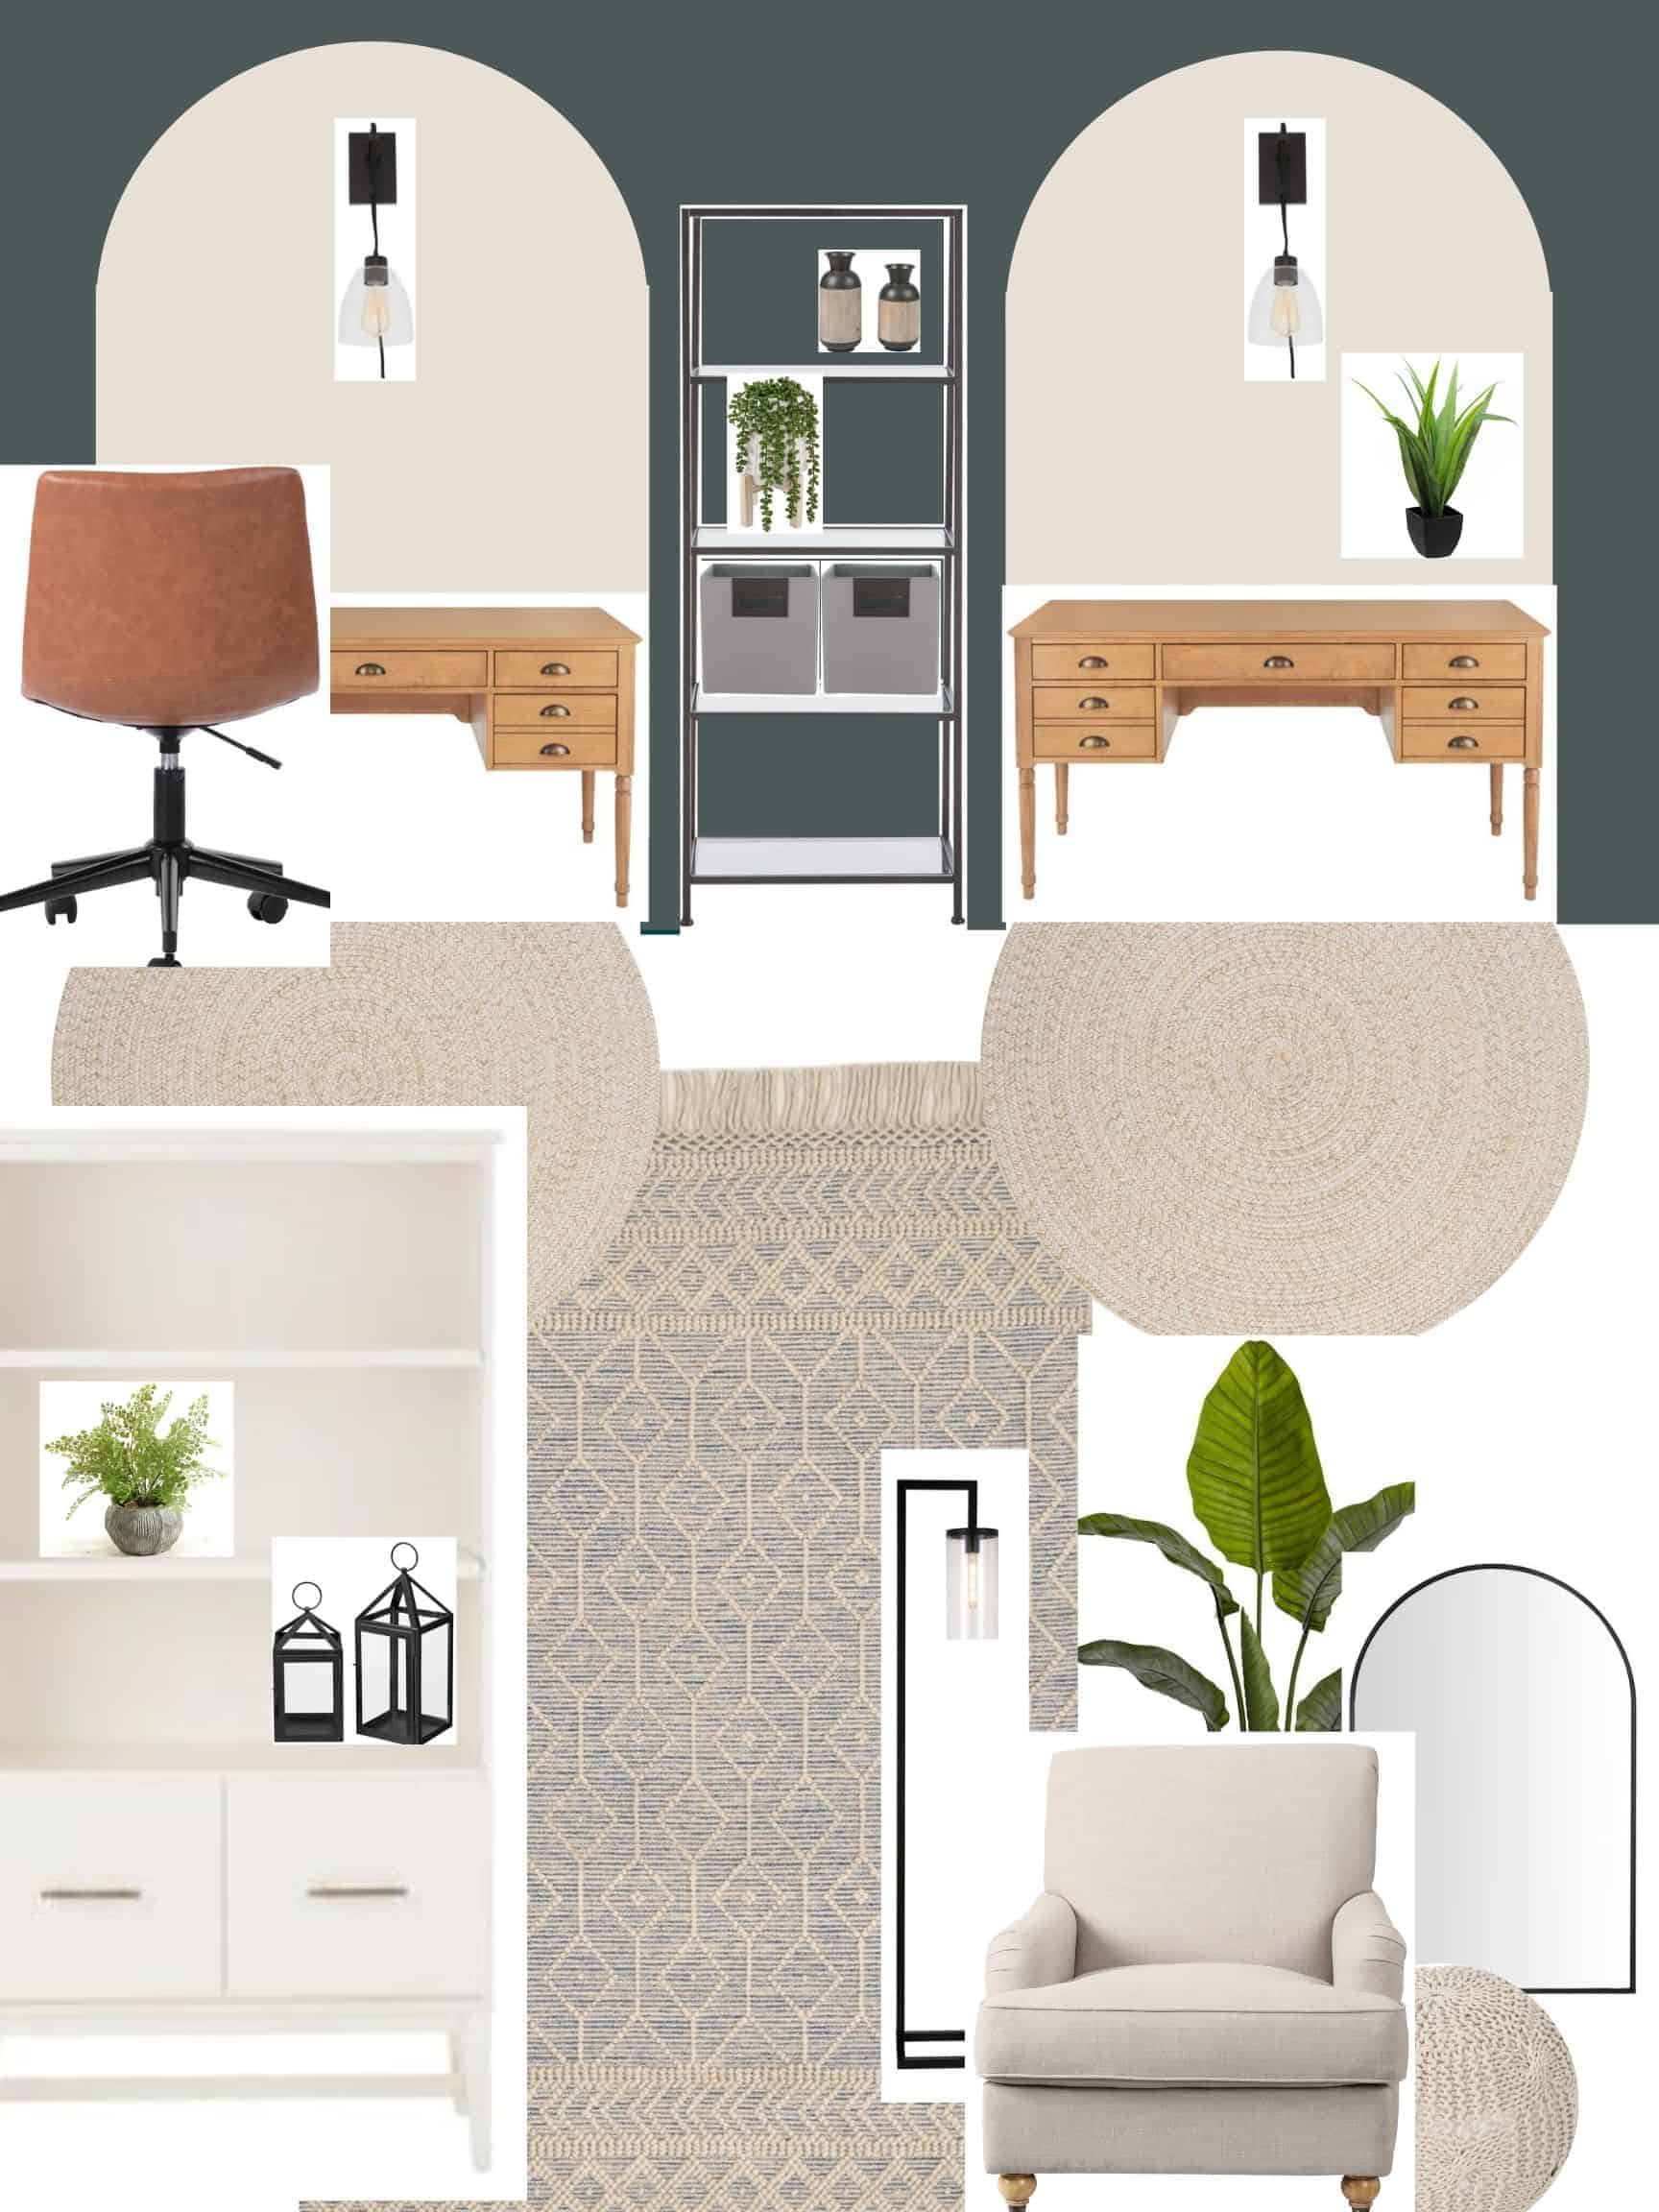 Interior Design Mood Board Examples | Psoriasisguru.com